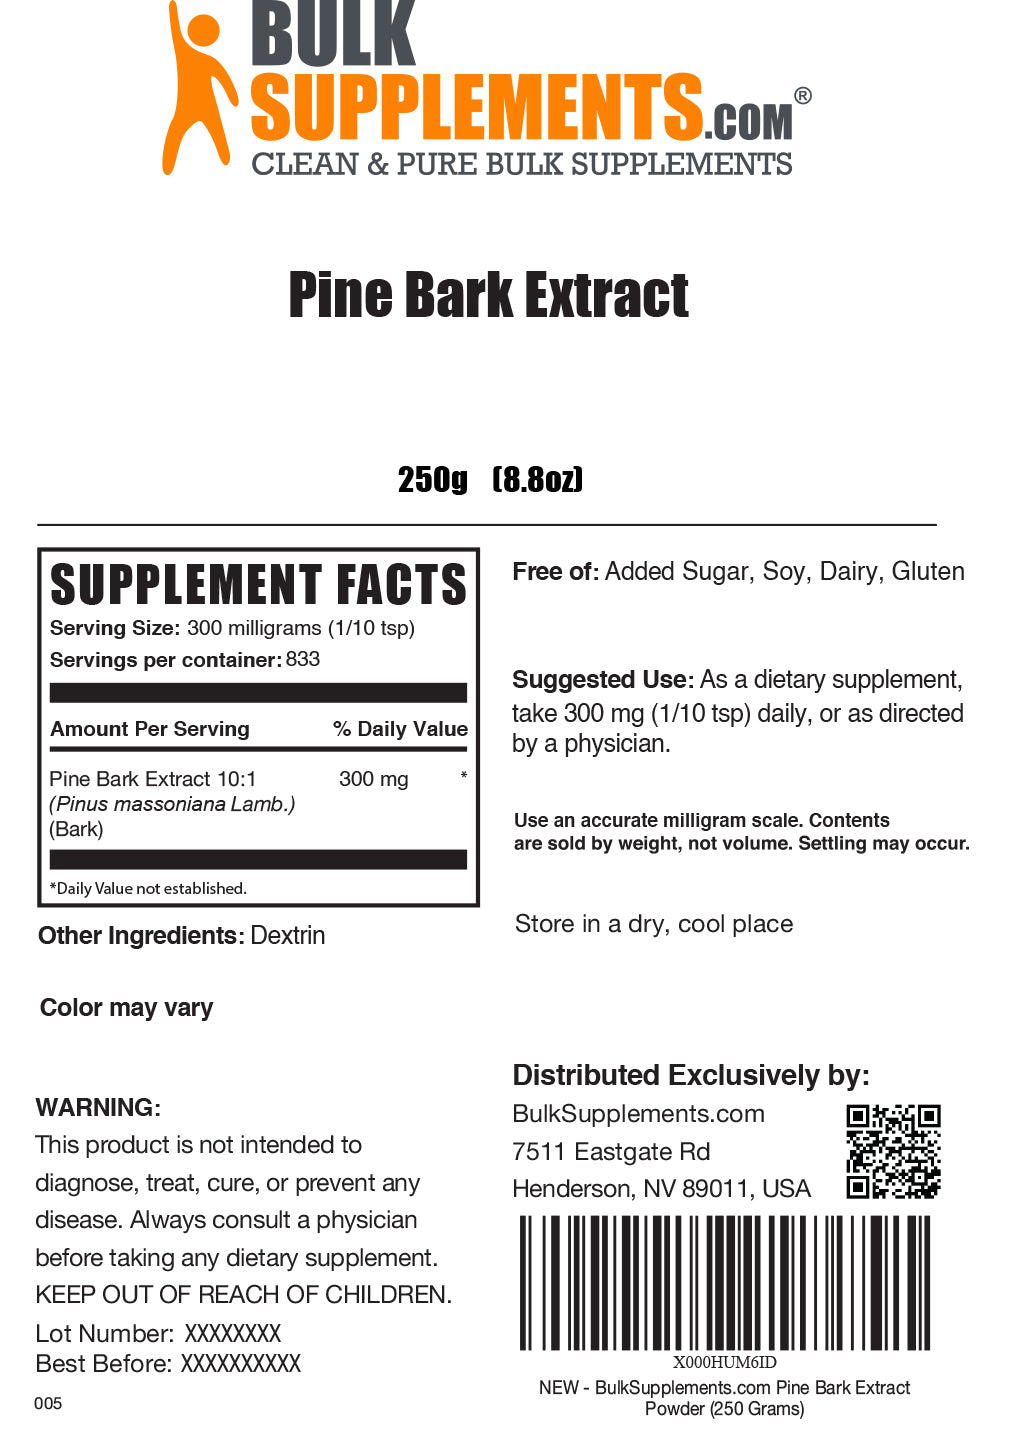 Pine Bark Extract powder label 250g